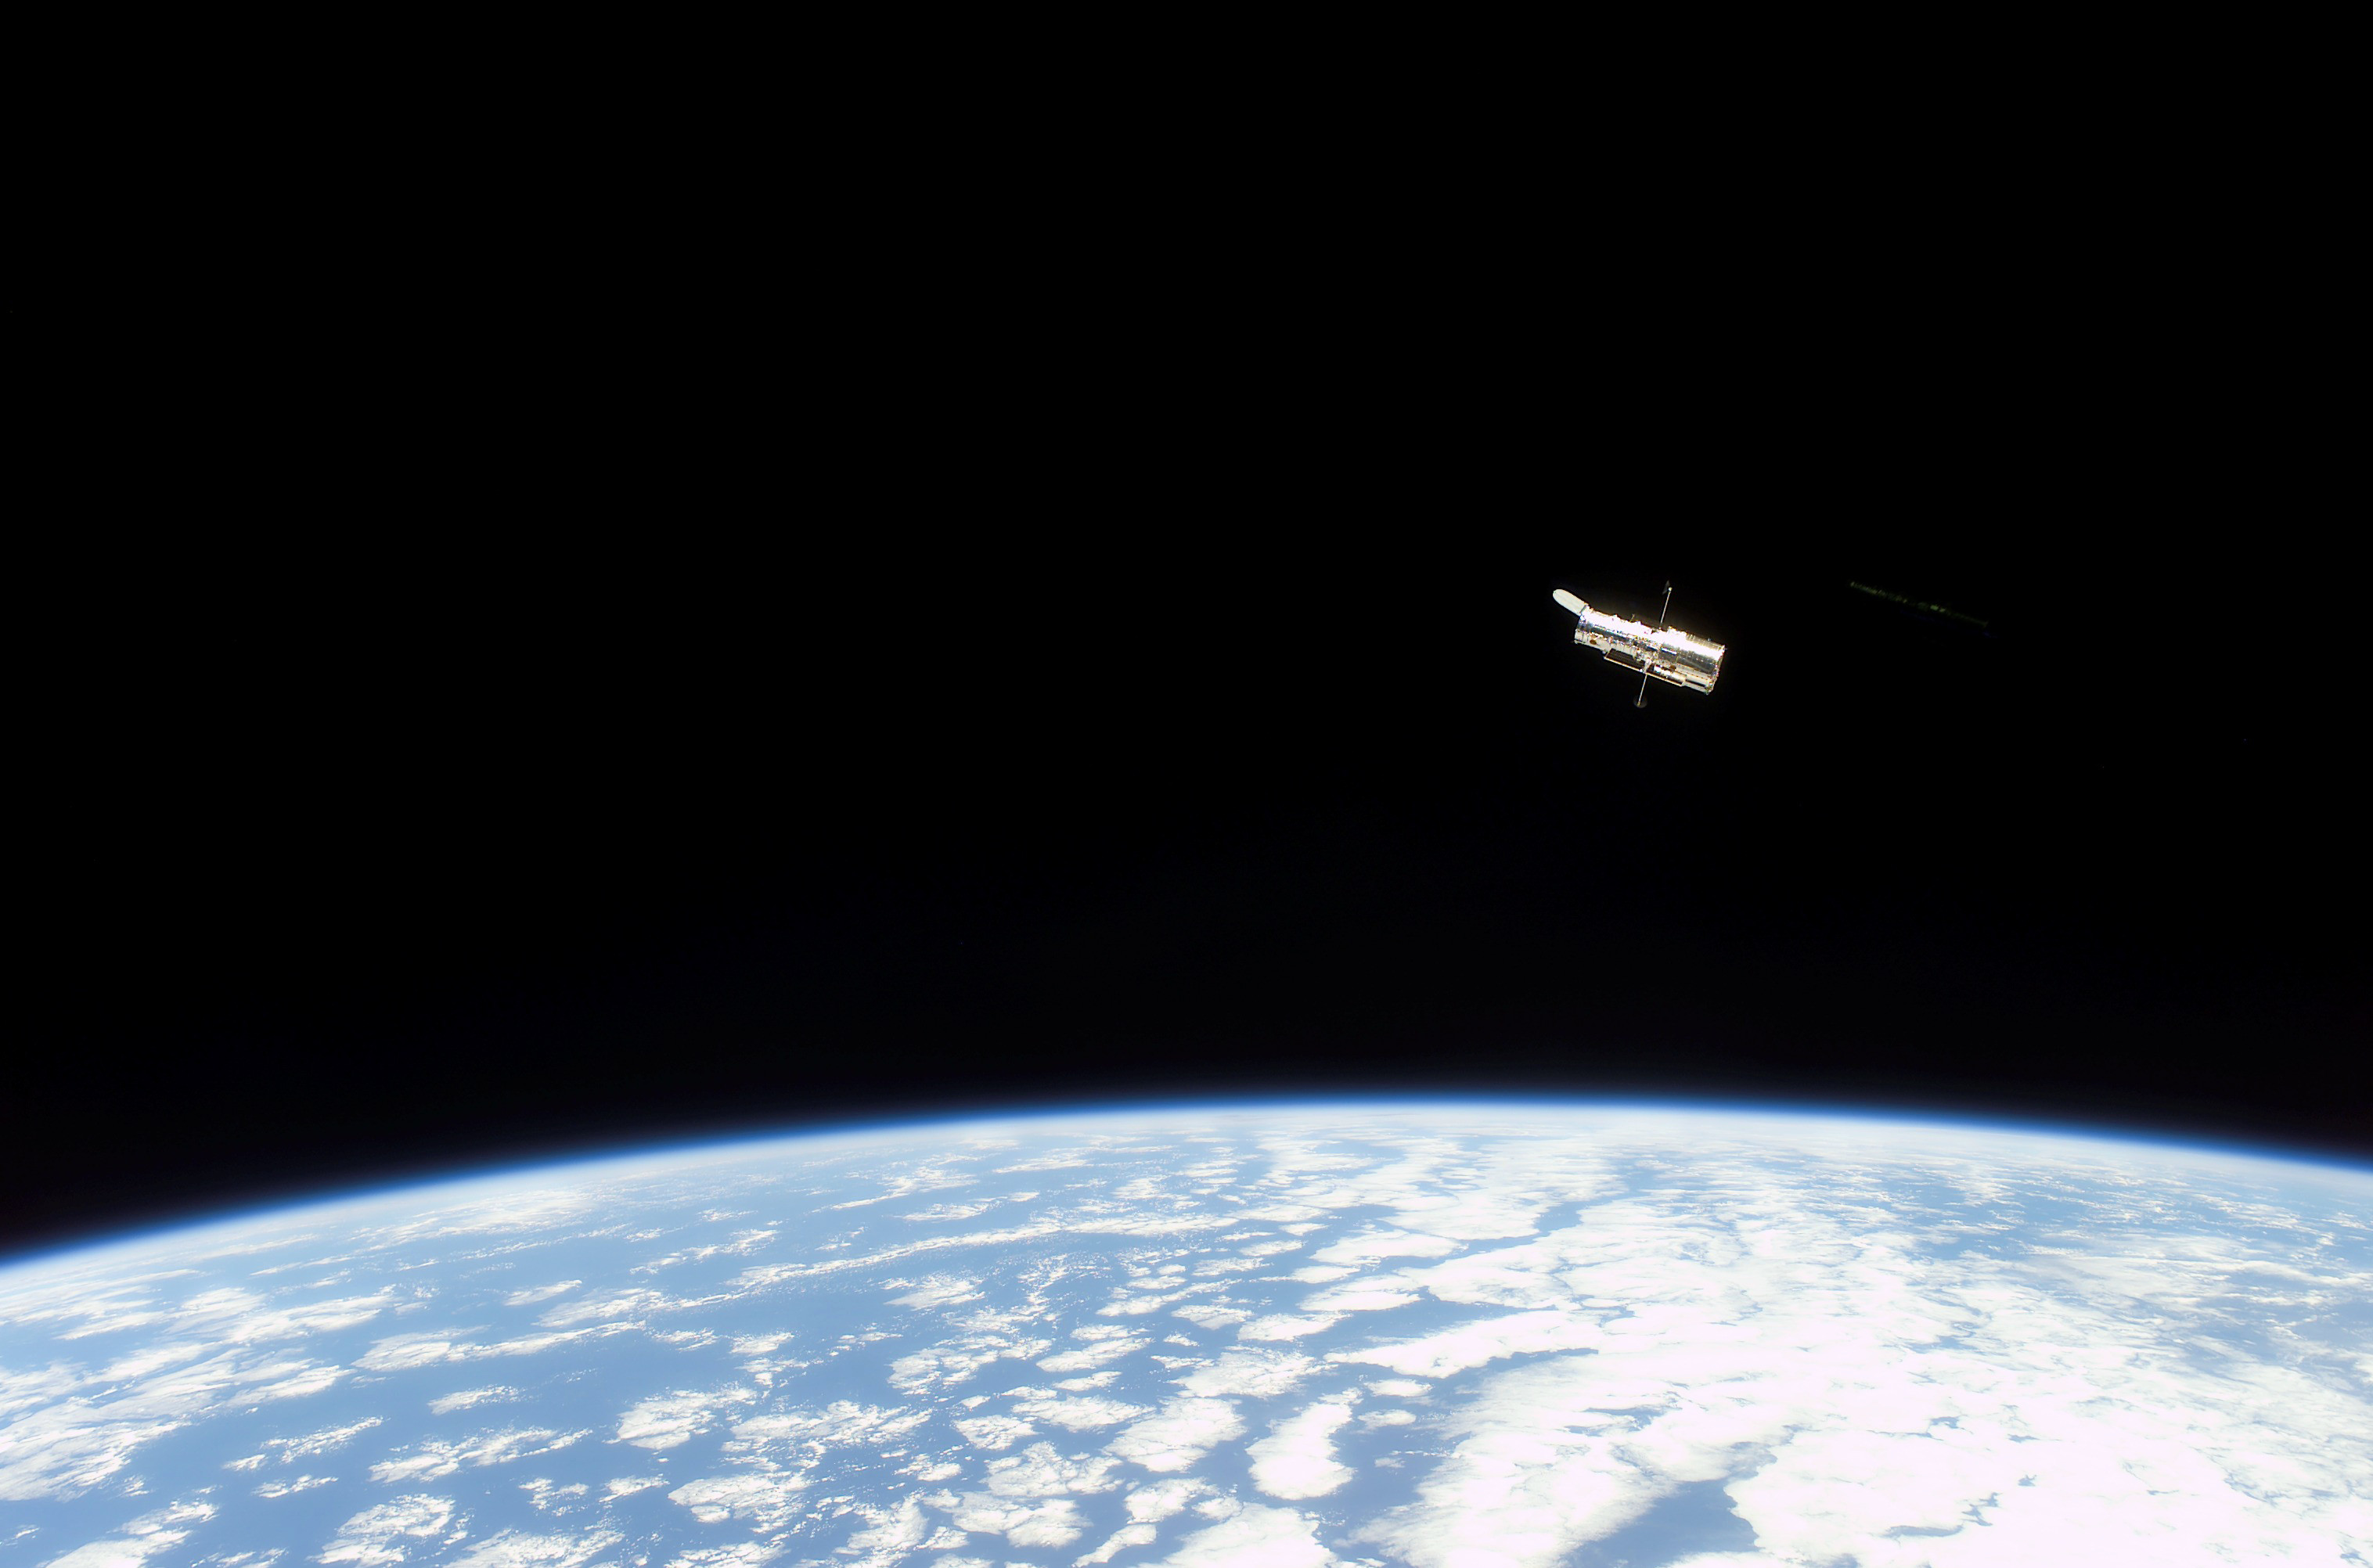 Image Archive: Spacecraft | ESA/Hubble